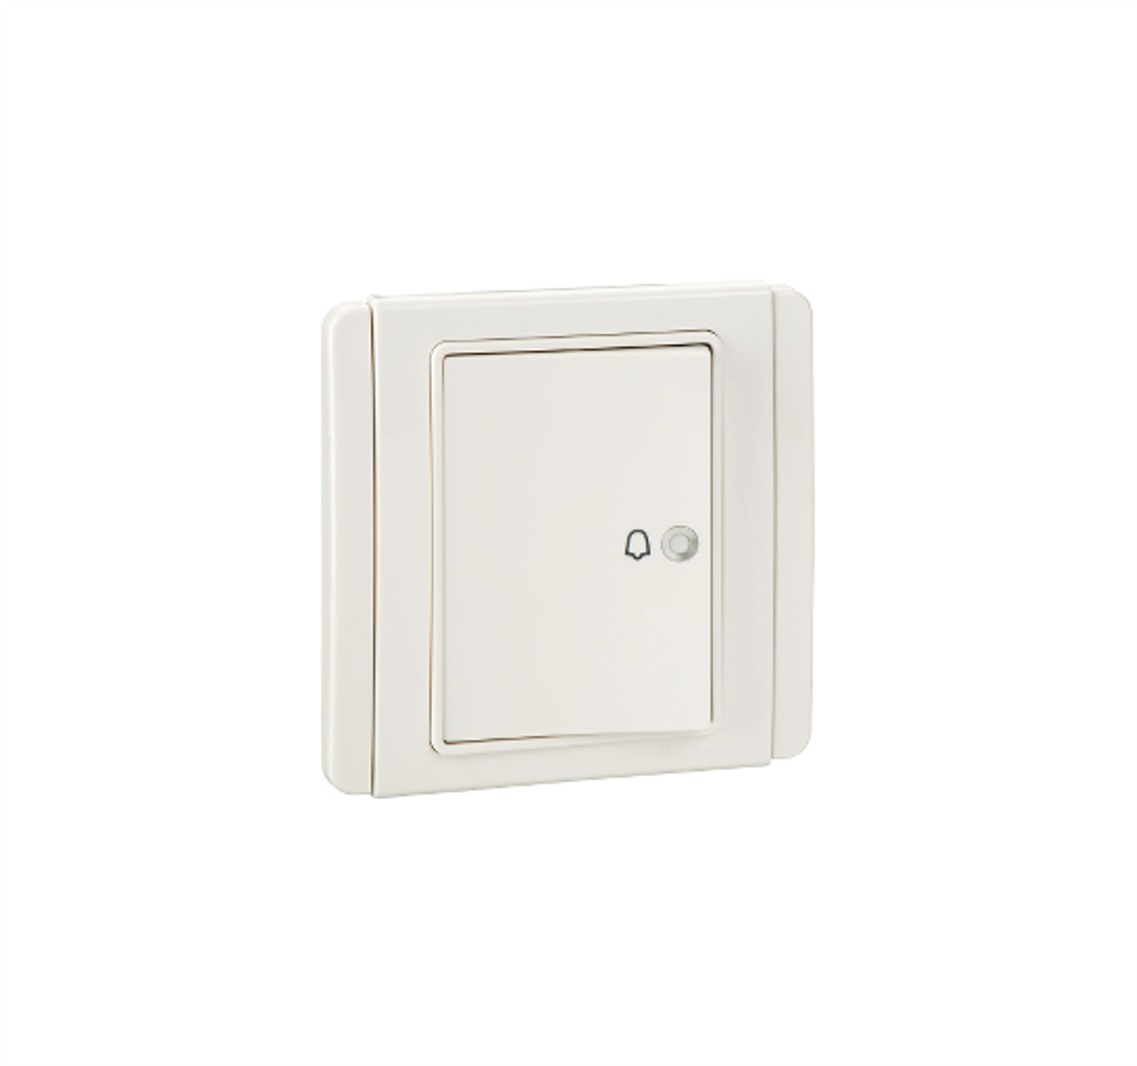 NEO - 4A 1 Way Horizontal Bell Push Switch (White)